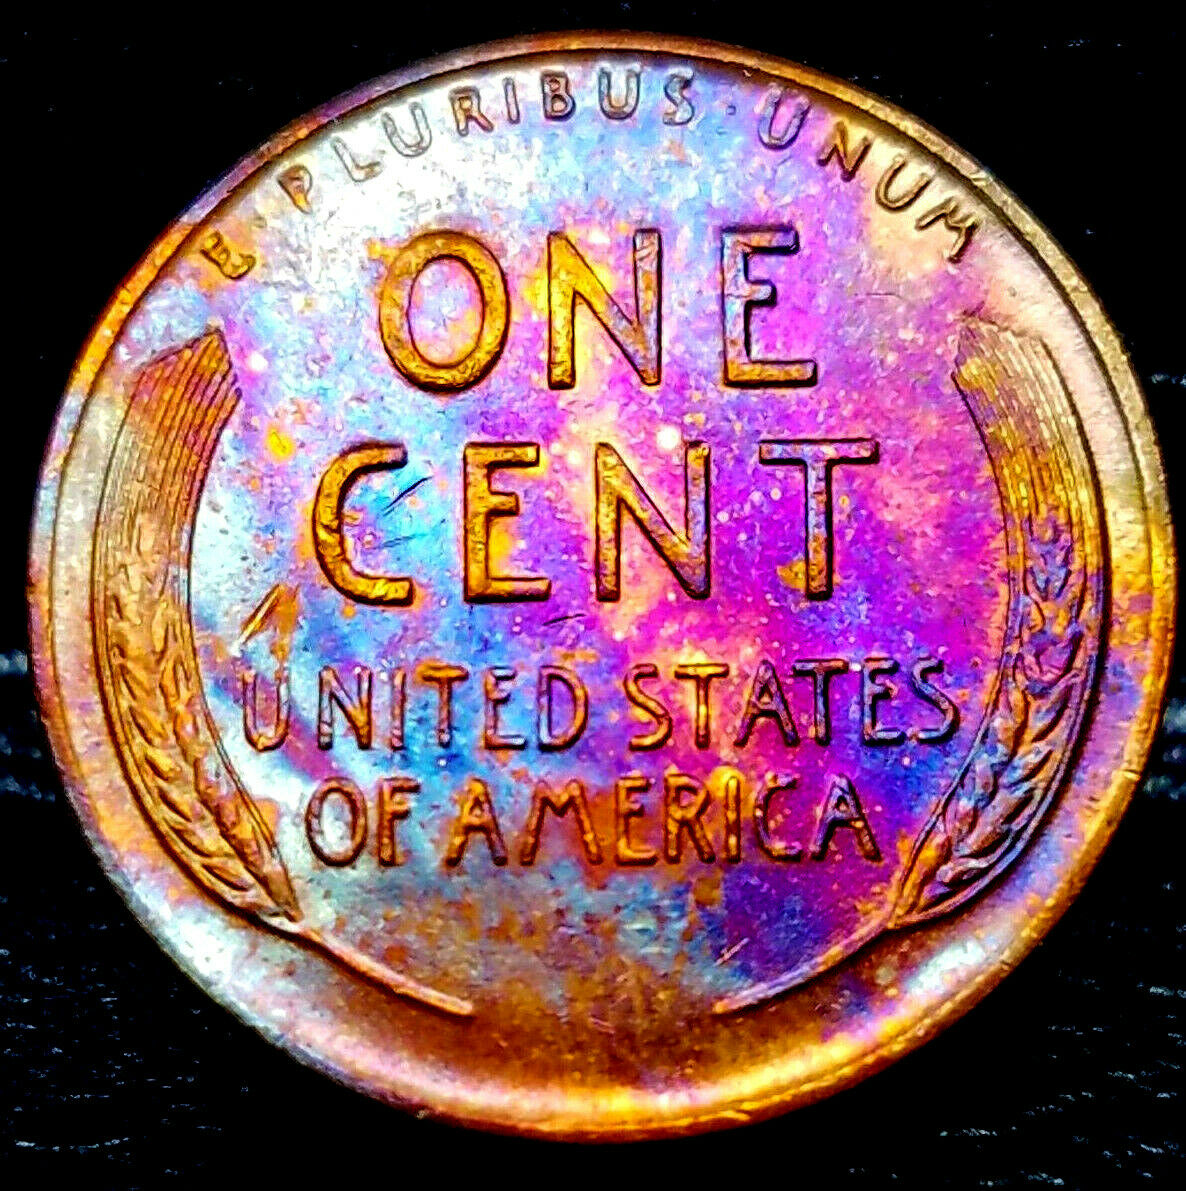 1951-D Lincoln  Cent  Toned  Very Choice++ Gem++   $2.76 + 000  283946159400  bdoubrava12012 (2).jpg